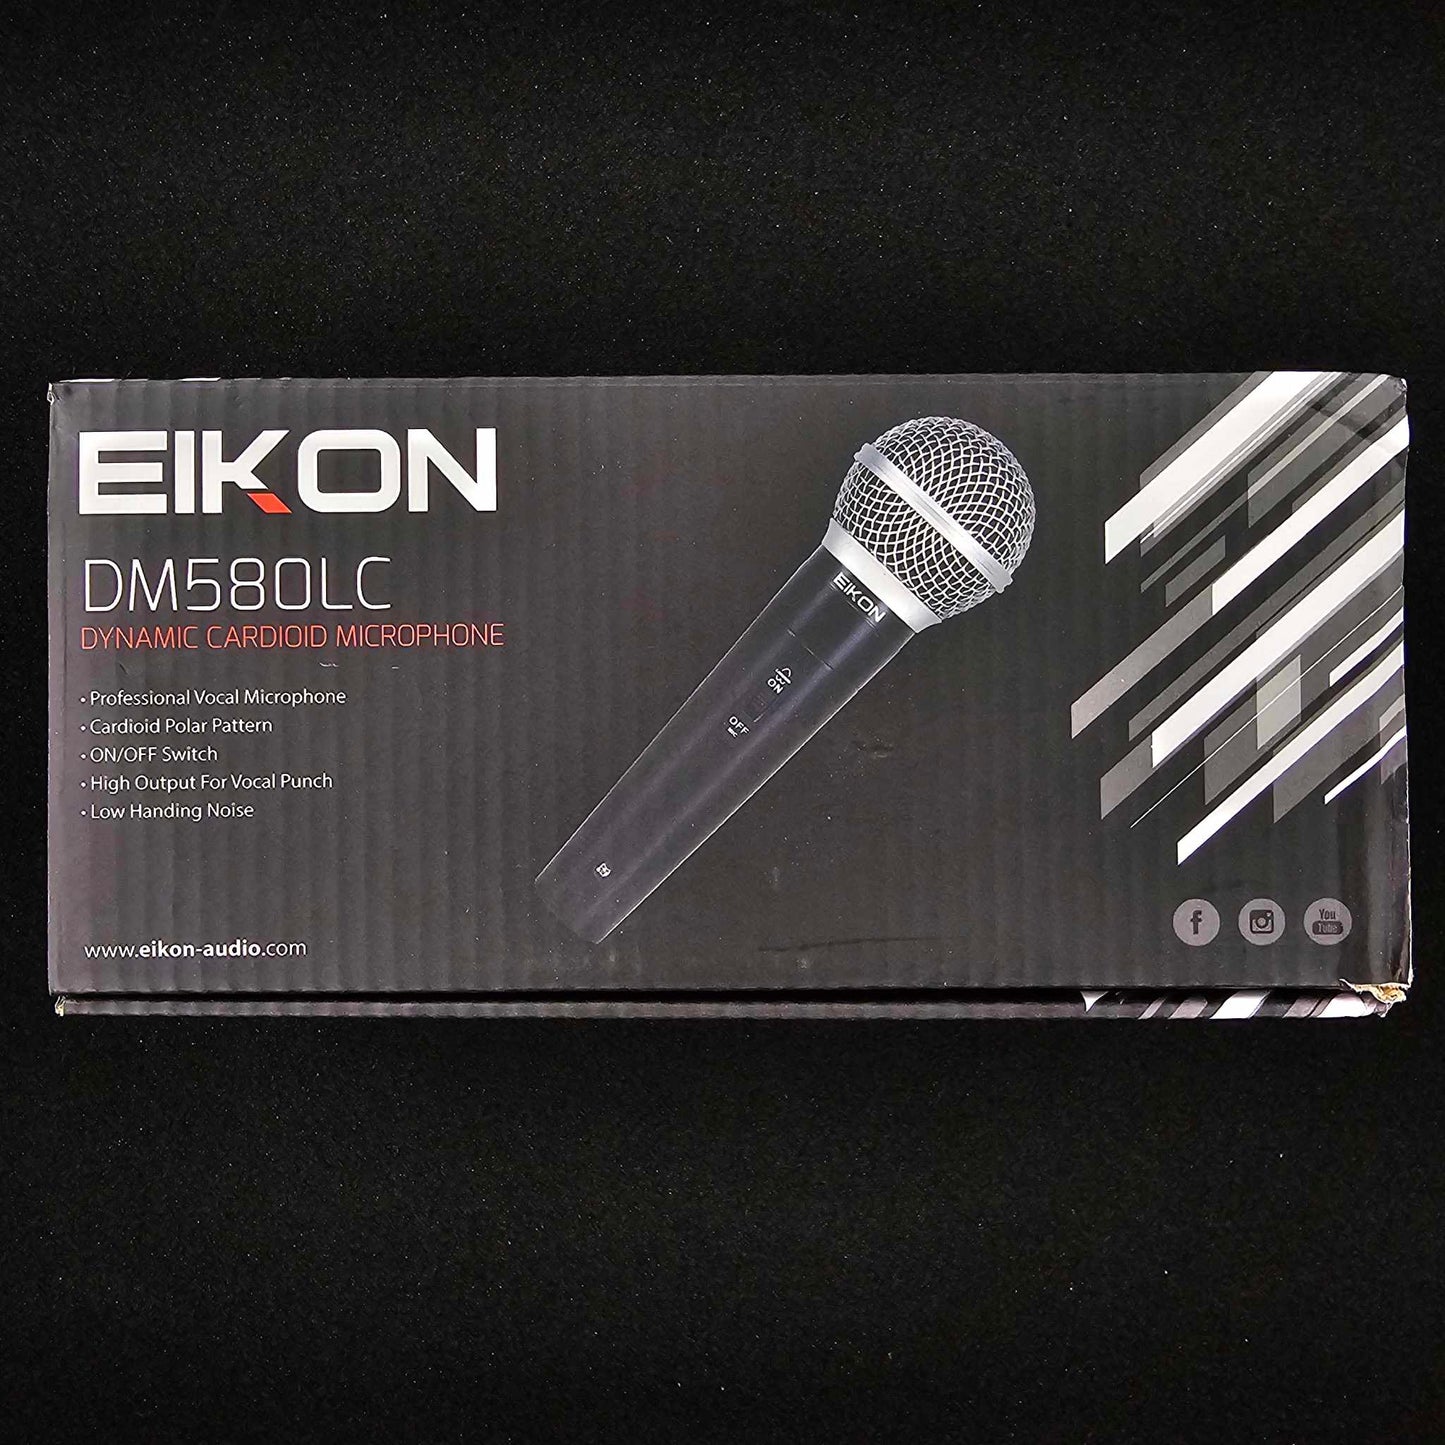 Eikon DM580LC Dynamic Cardoid Vocal Microphone